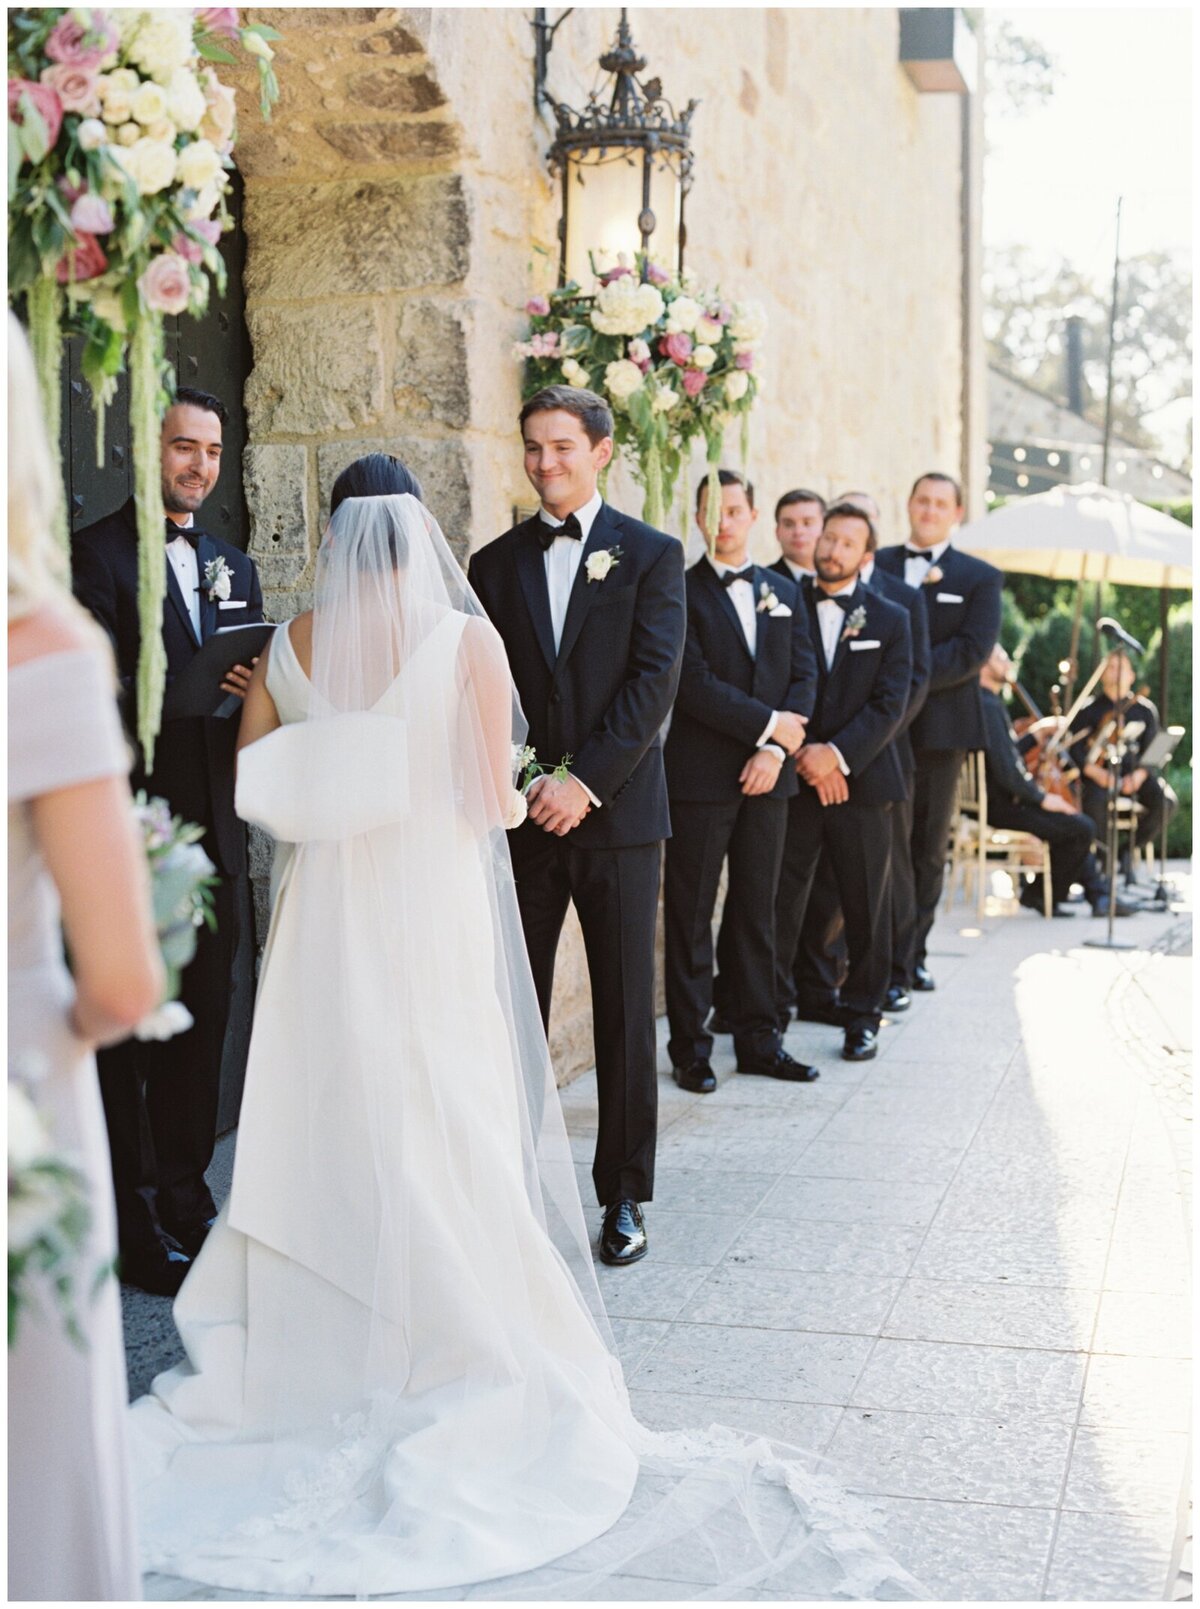 Kelsey-Alex-Sonoma-Buena-Vista-Winery-Wedding-Cassie-Valente-Photography-0557